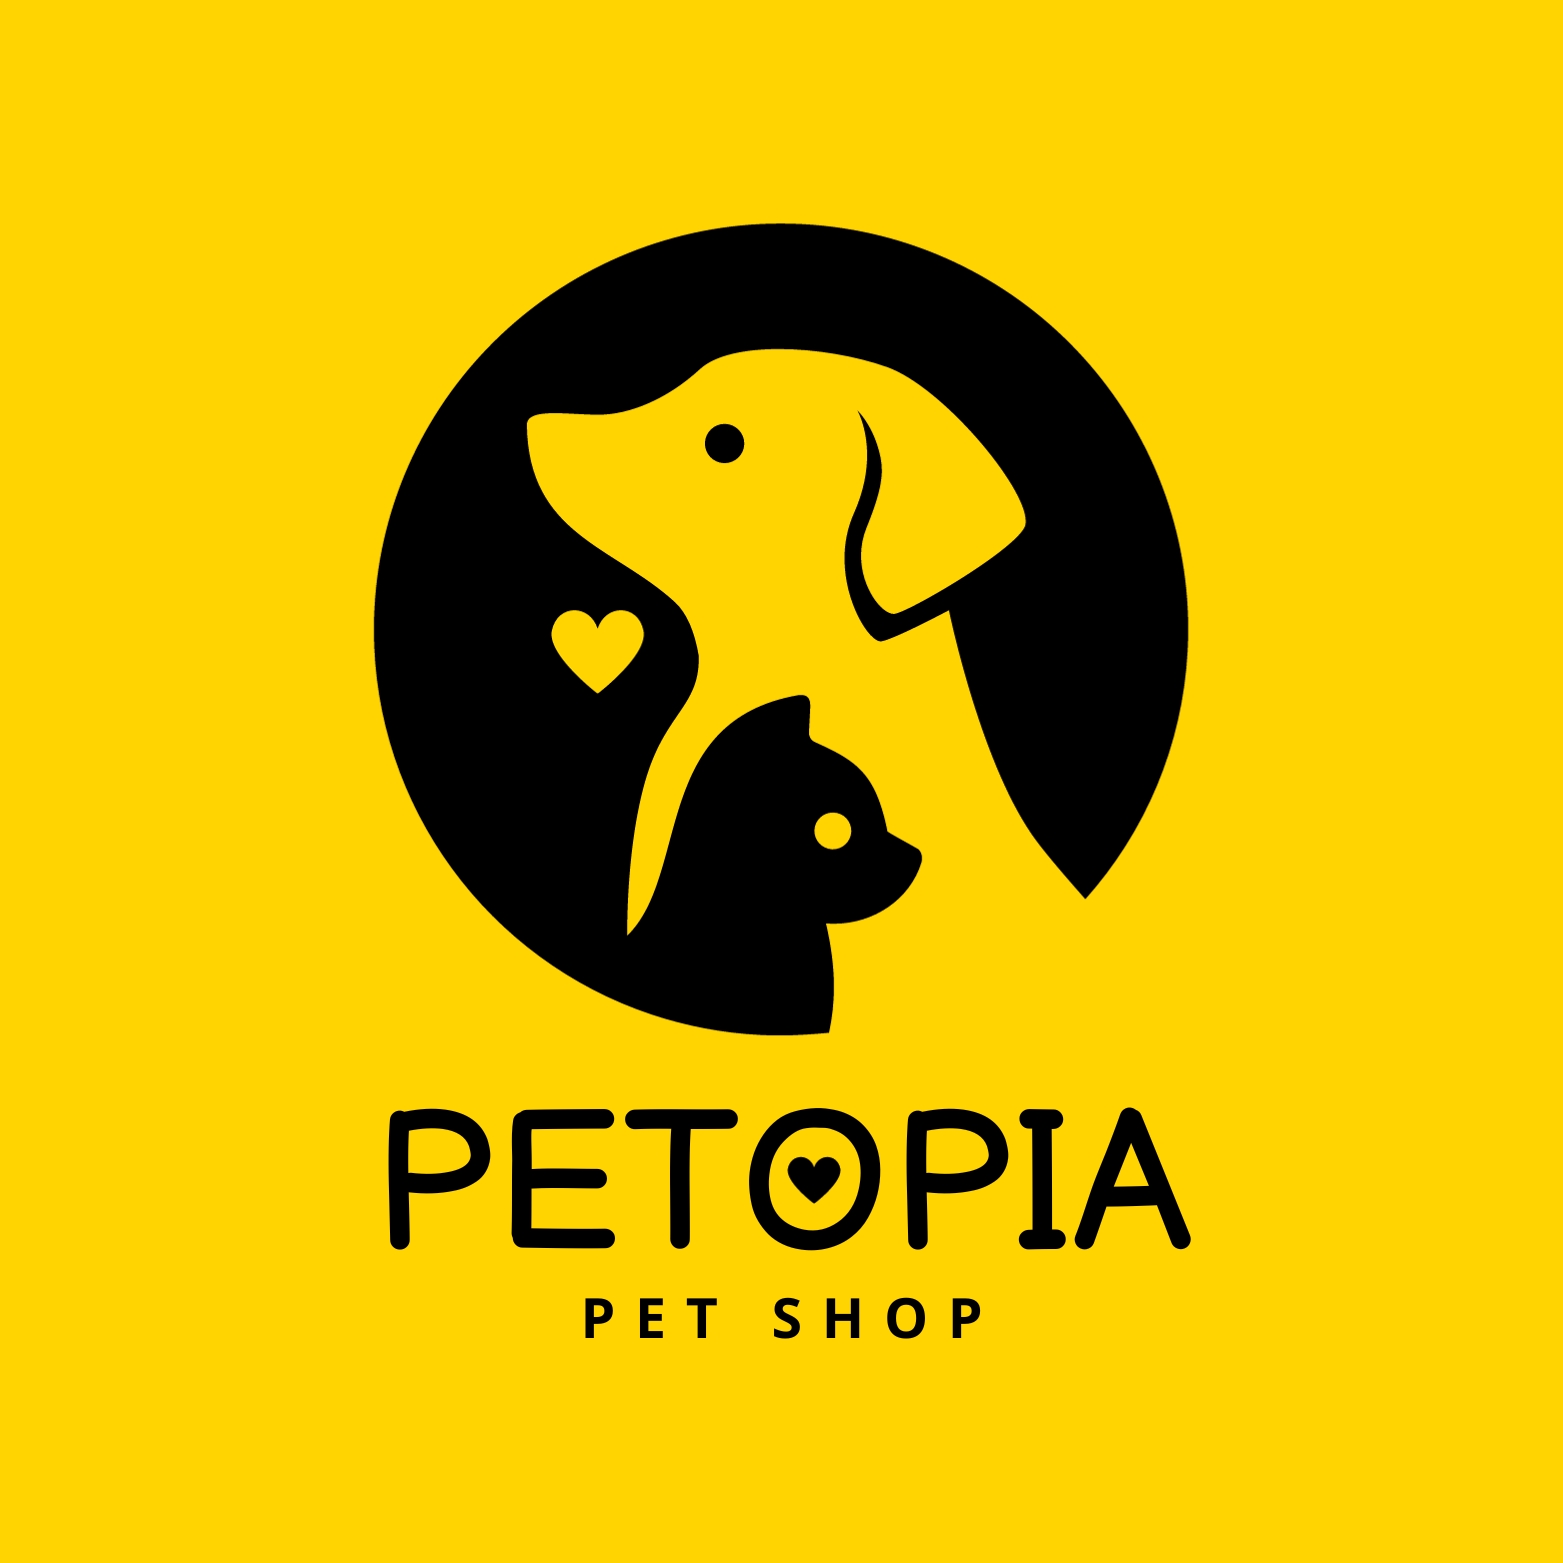 yellow black simple pet logo 626